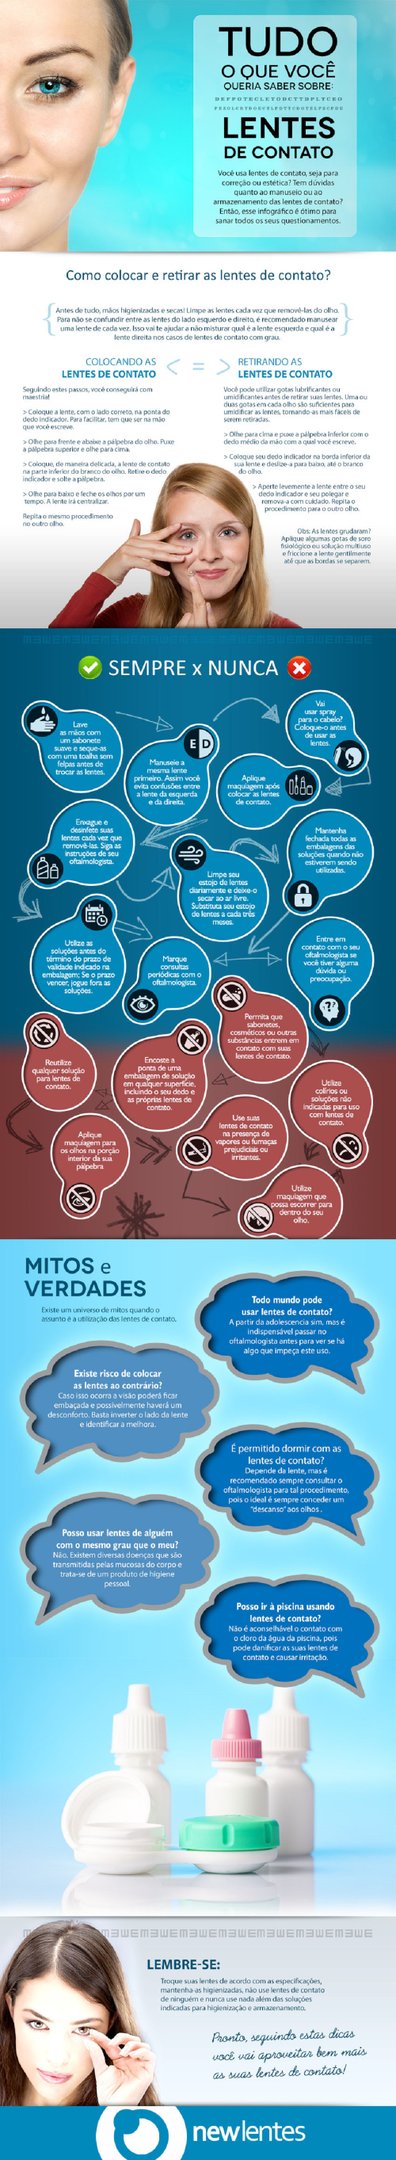 Mitos e verdades sobre lentes de contato [infográfico]